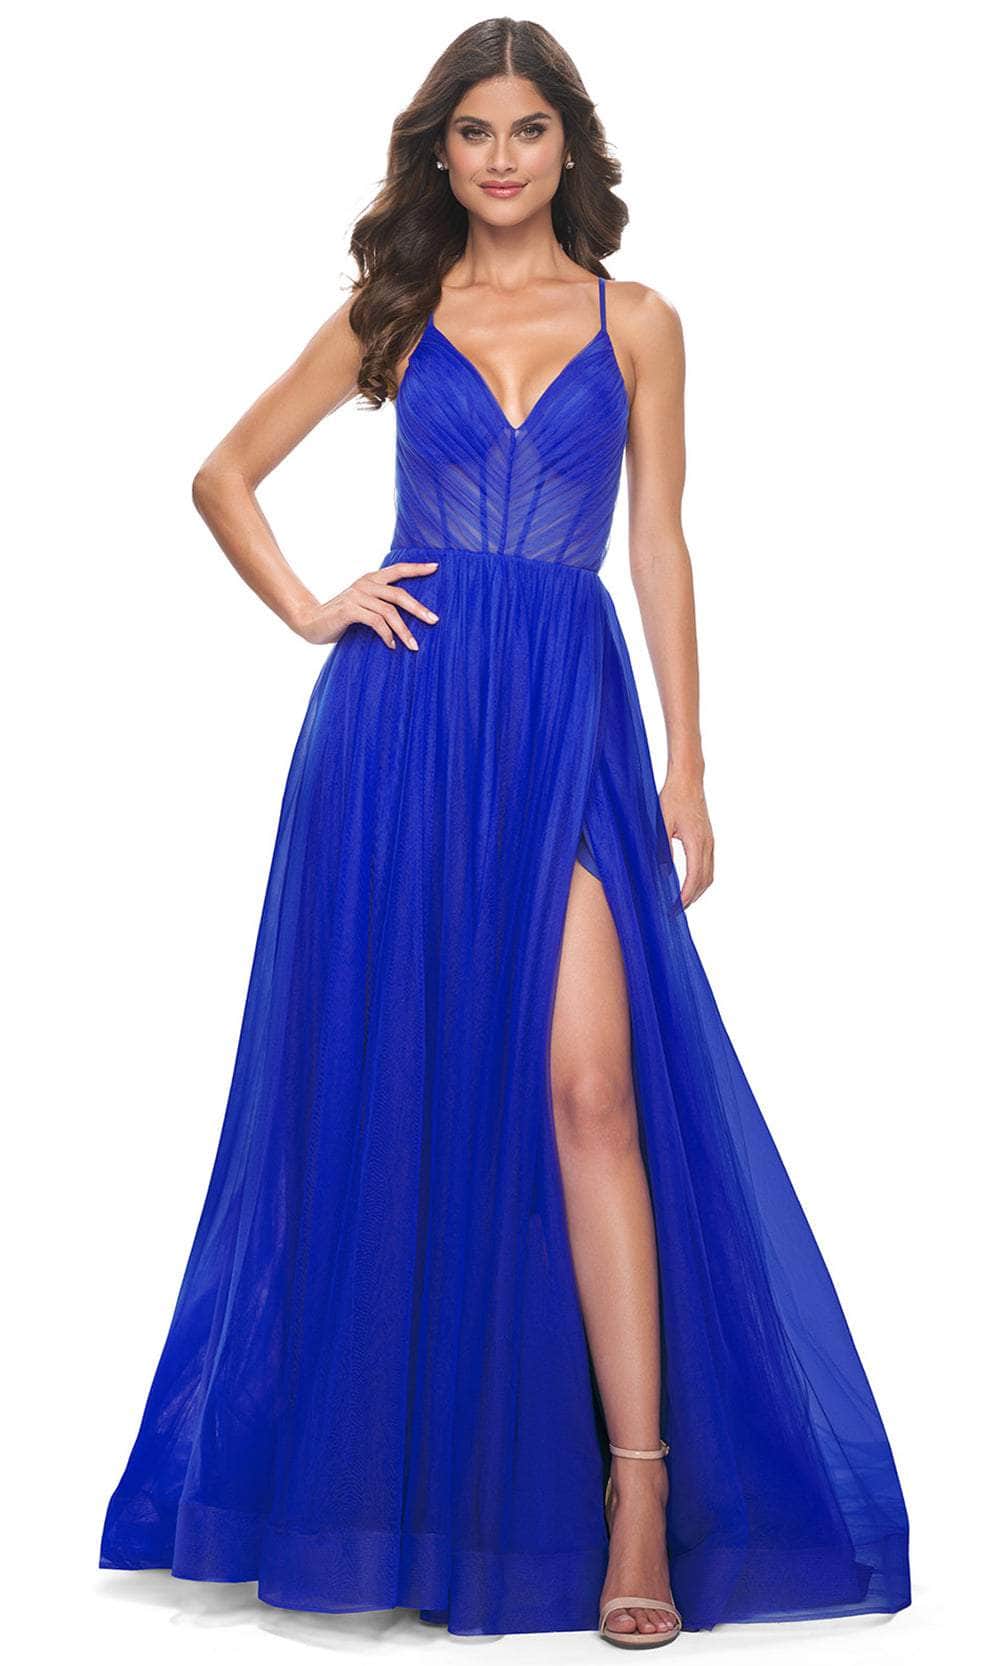 La Femme 31457 - Spaghetti Strap Tulle A-Line Prom Dress
